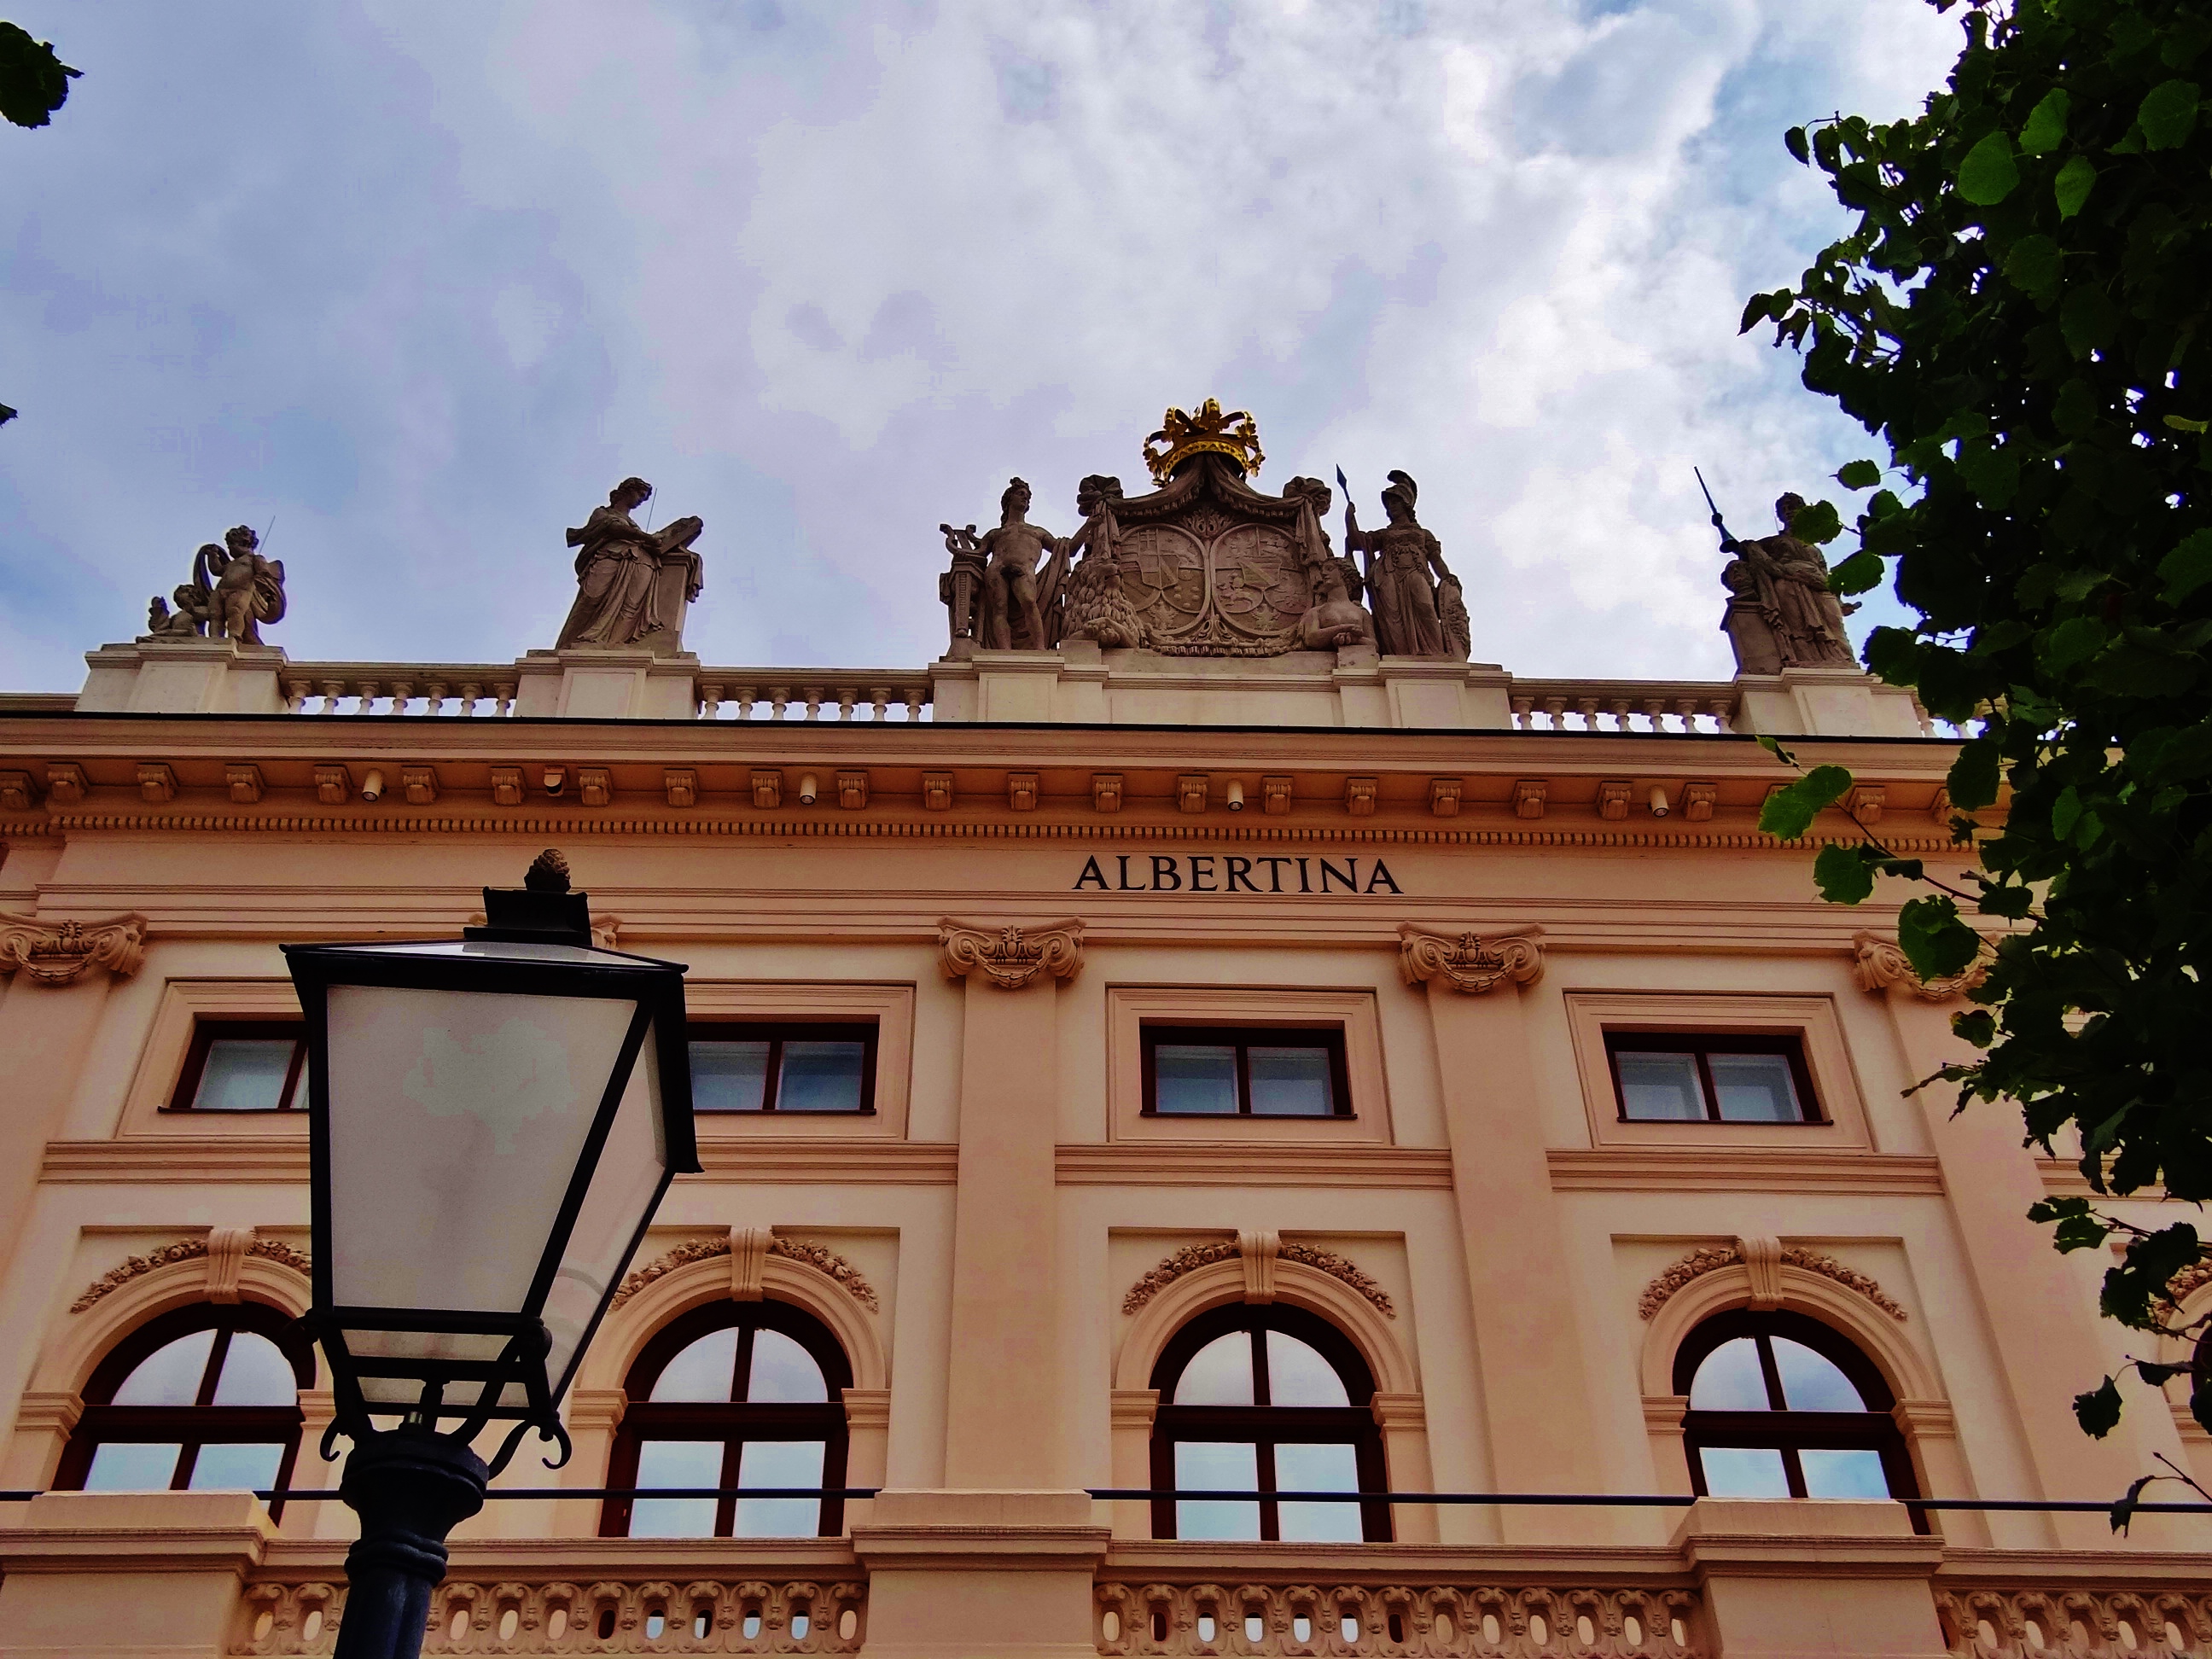 Foto: Albertina - Wien (Vienna), Austria